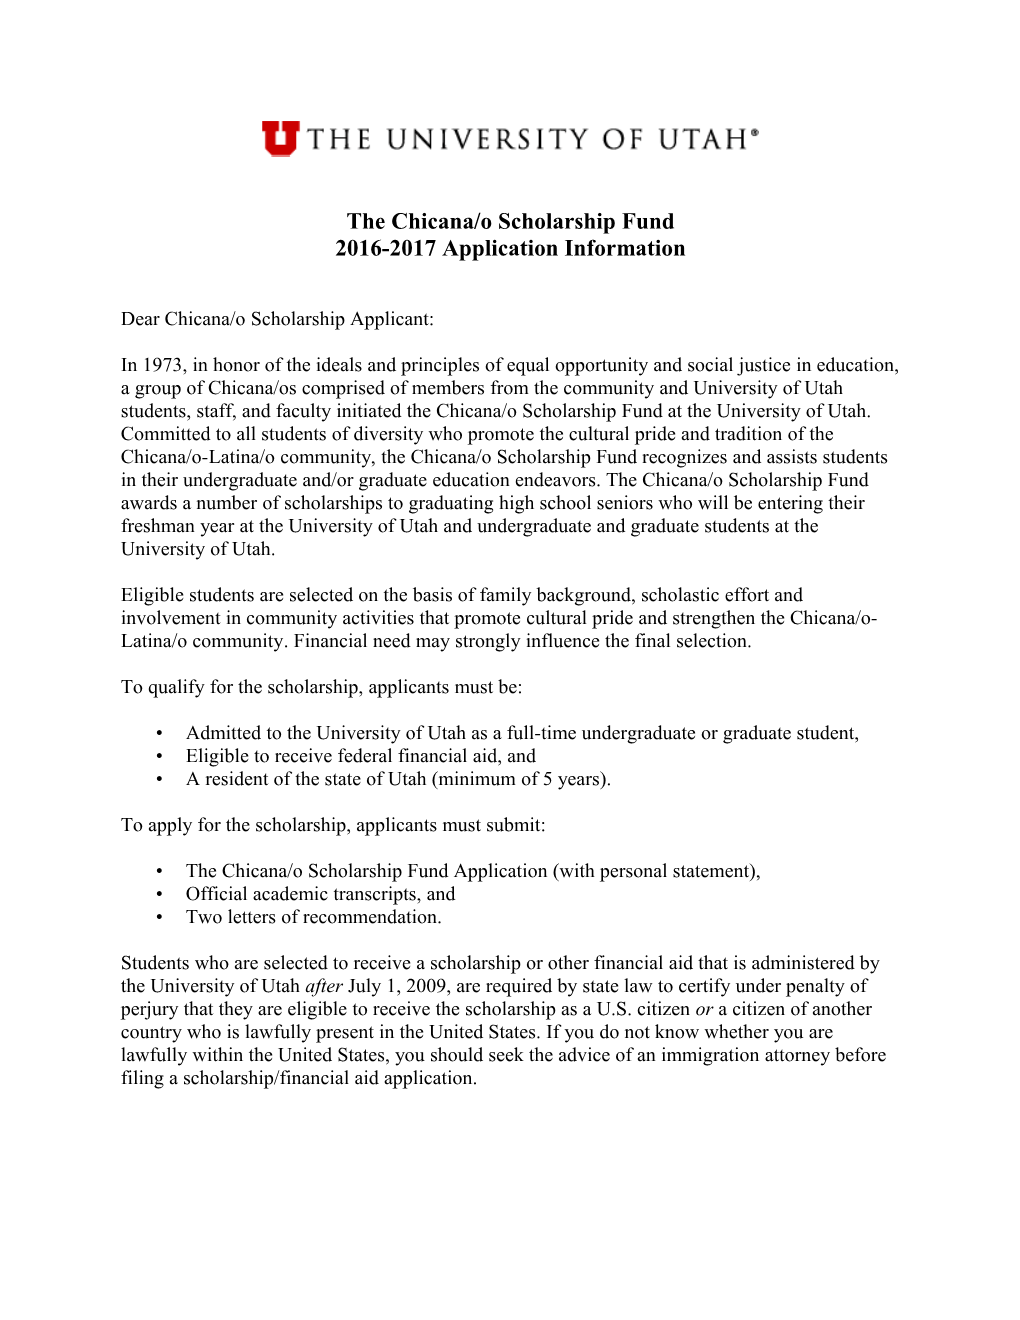 The Chicana/O Scholarshipfund